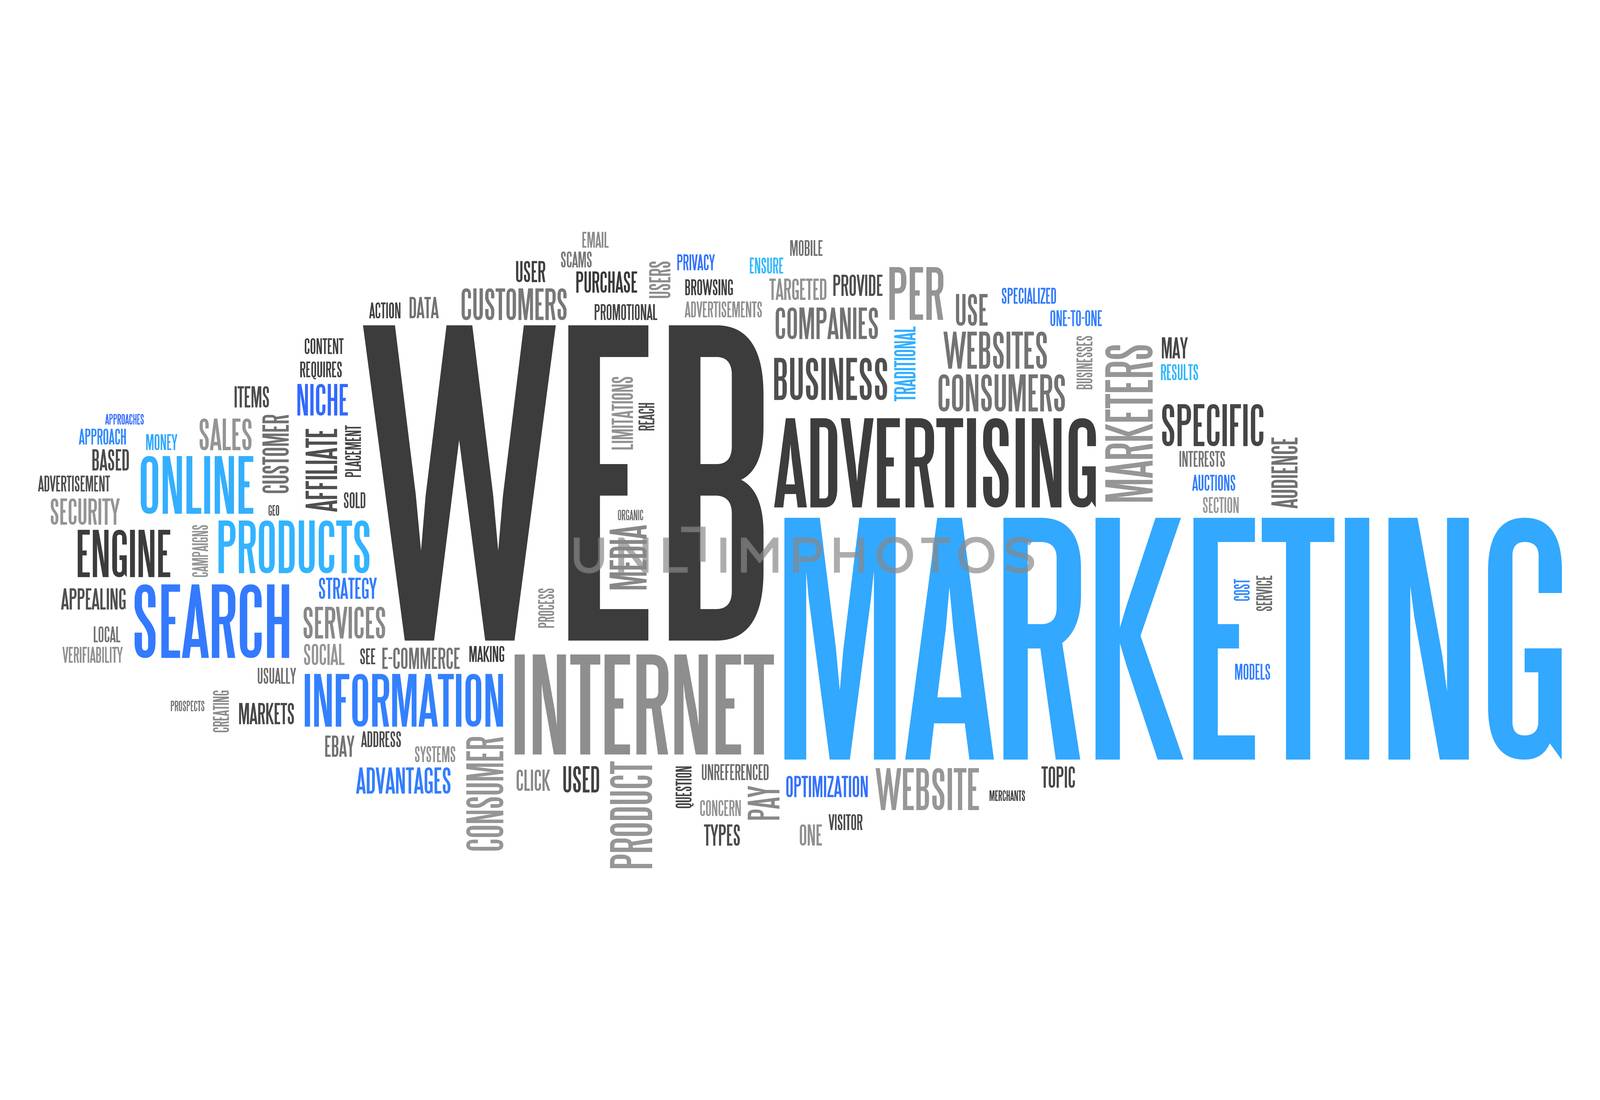 Word Cloud "Web Marketing" by mindscanner